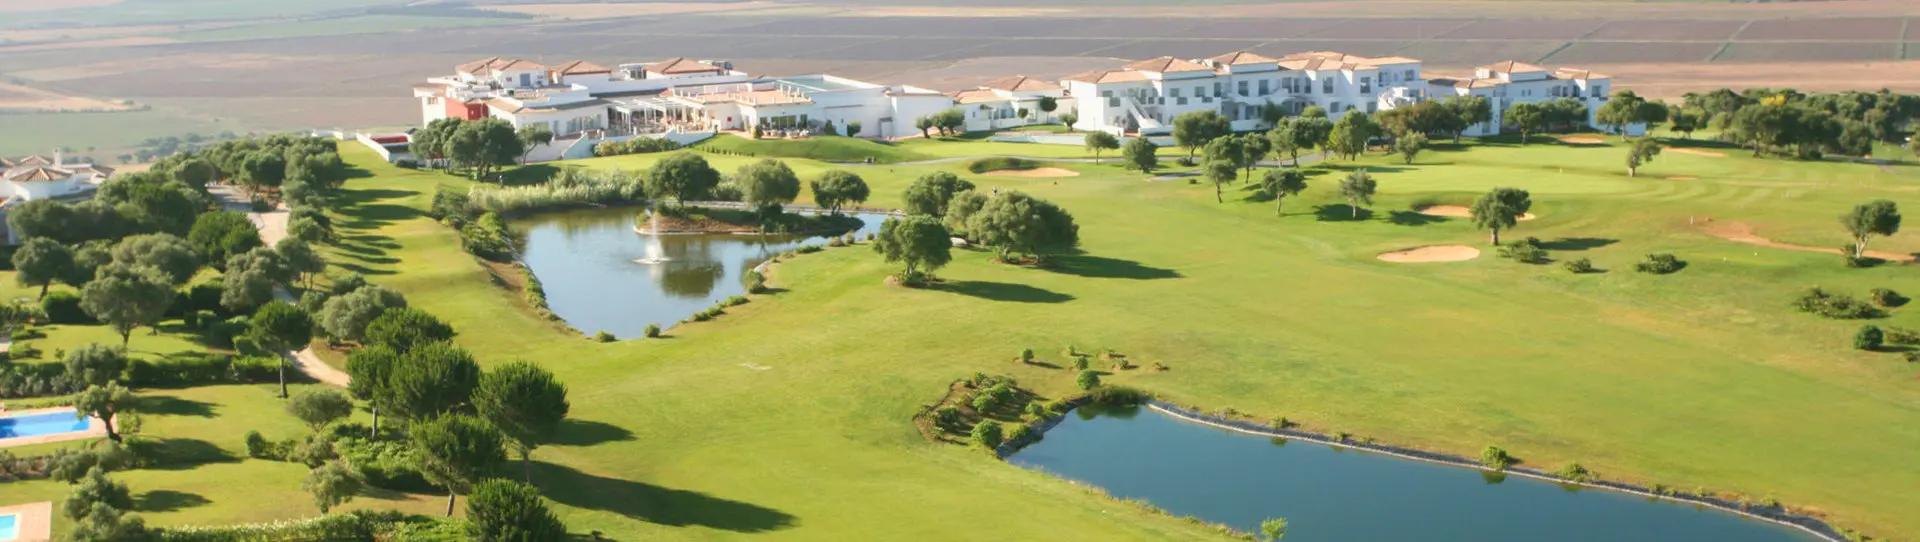 Spain golf holidays - Costa de la Luz 4 Rounds Golf Pack - Photo 2